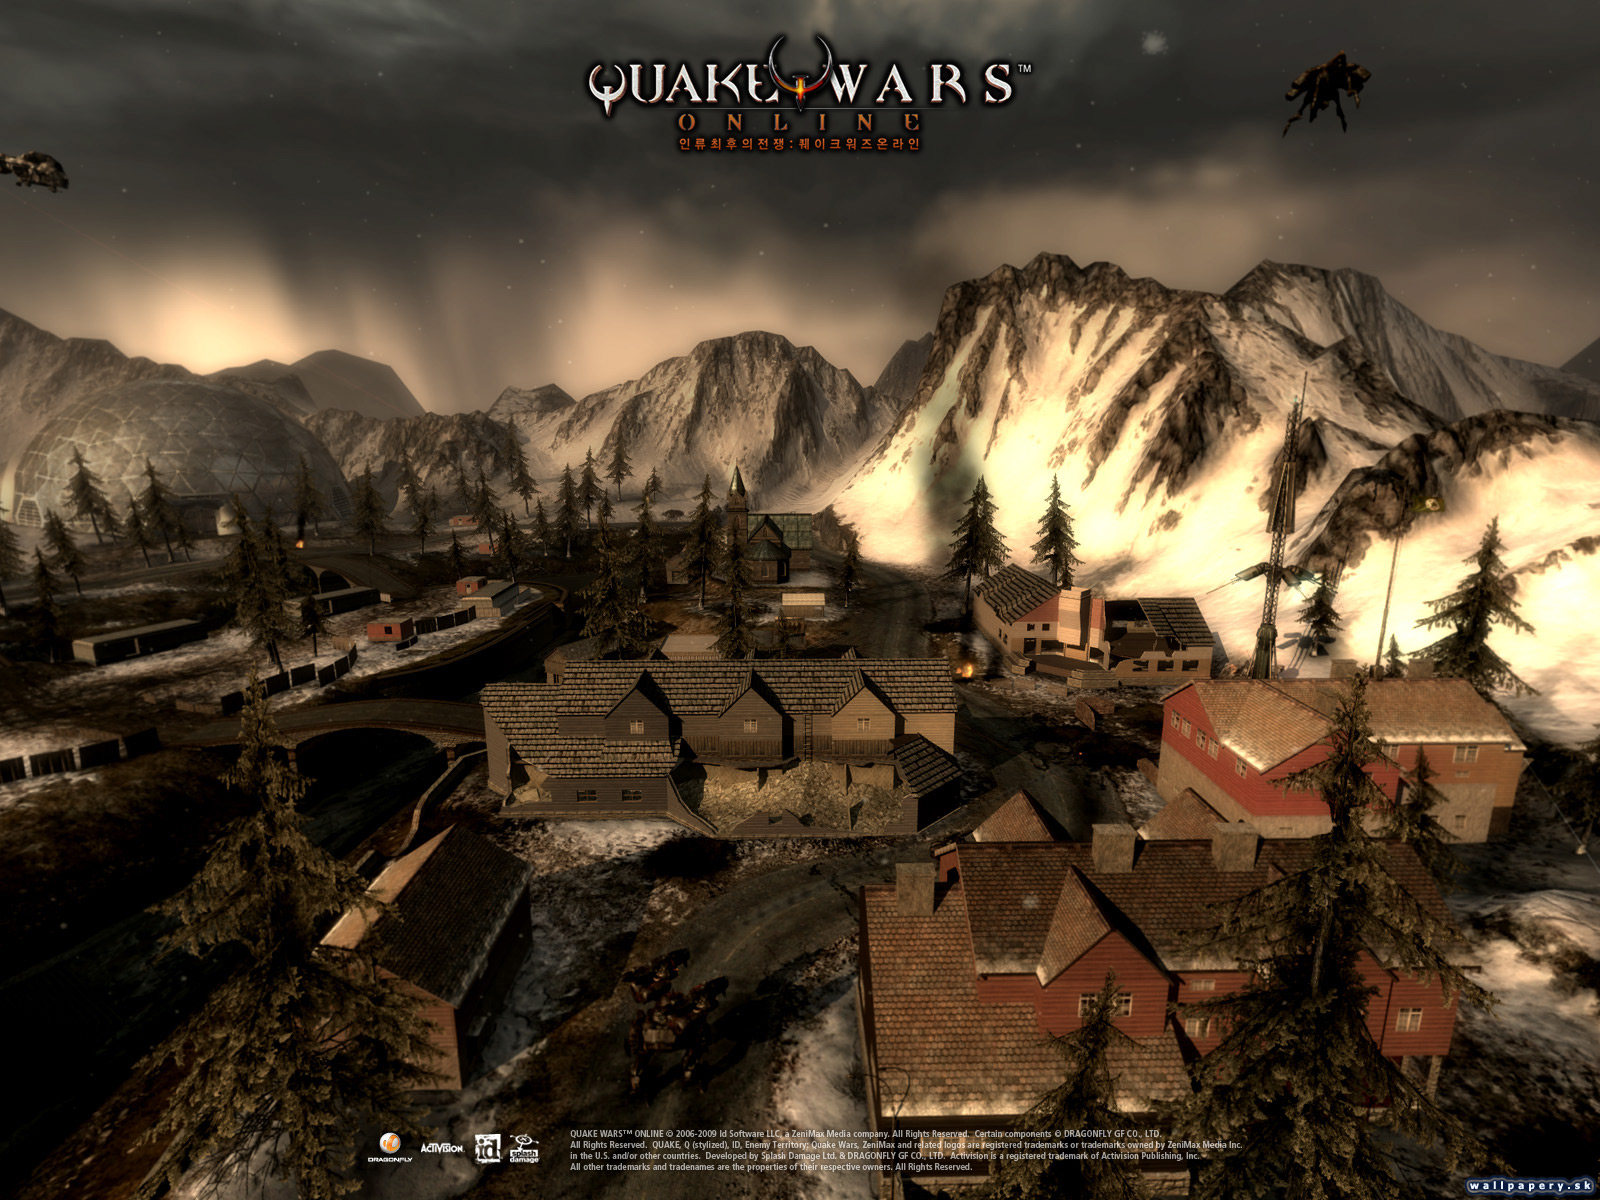 Quake Wars Online - wallpaper 14